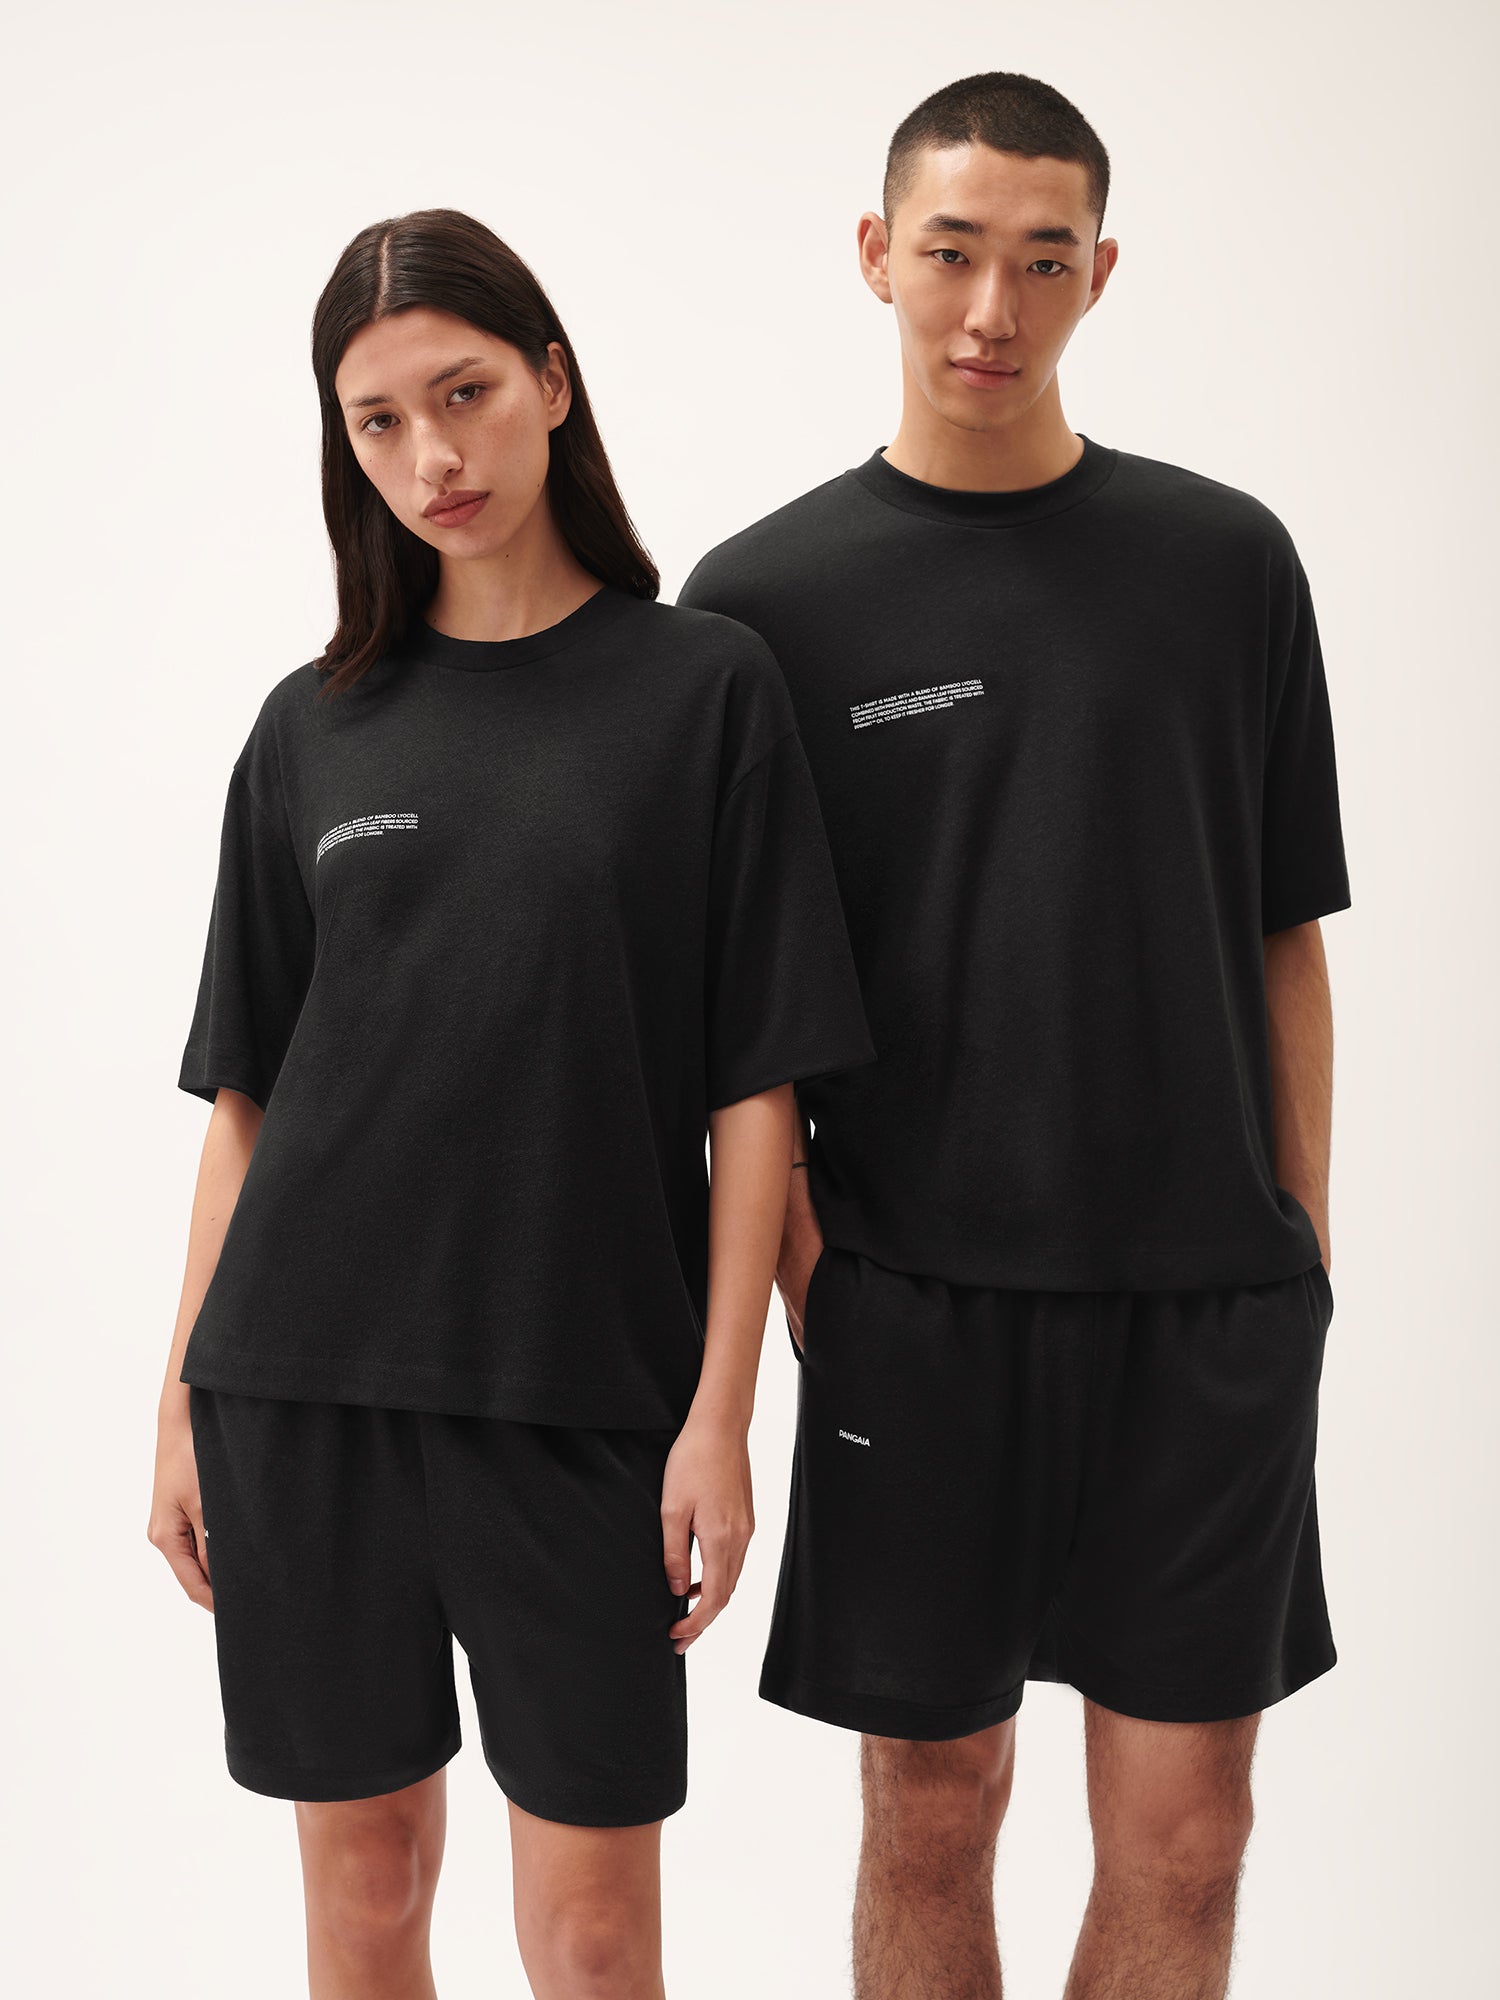 FRUTFIBER__T-shirt_Black_Duo_2